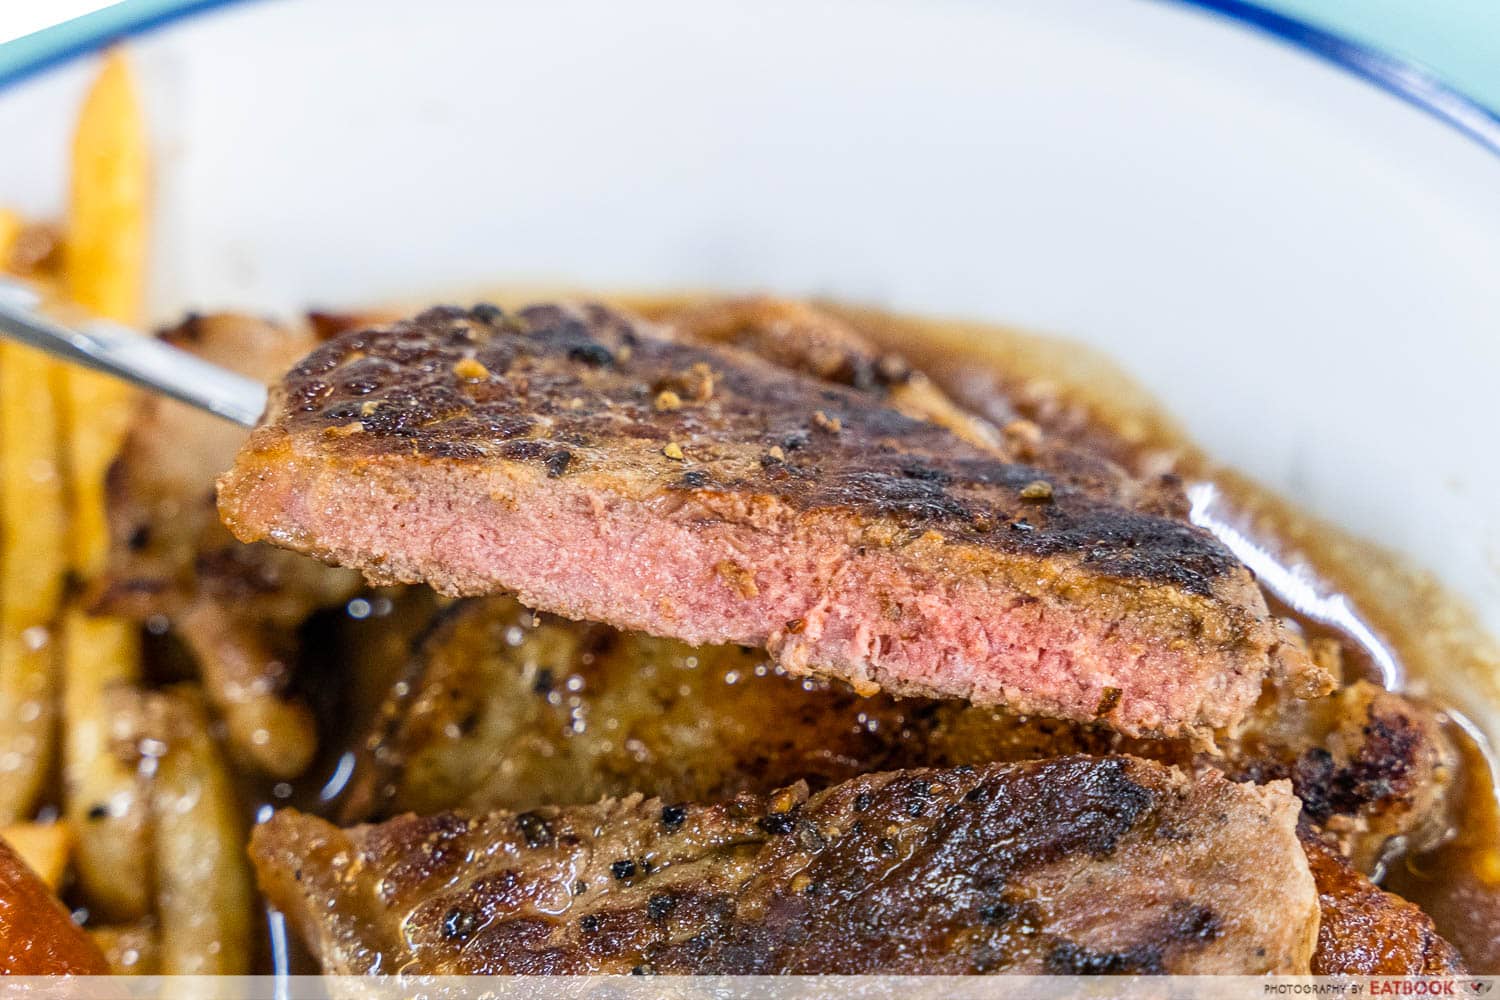 Grass-fed Australian steak